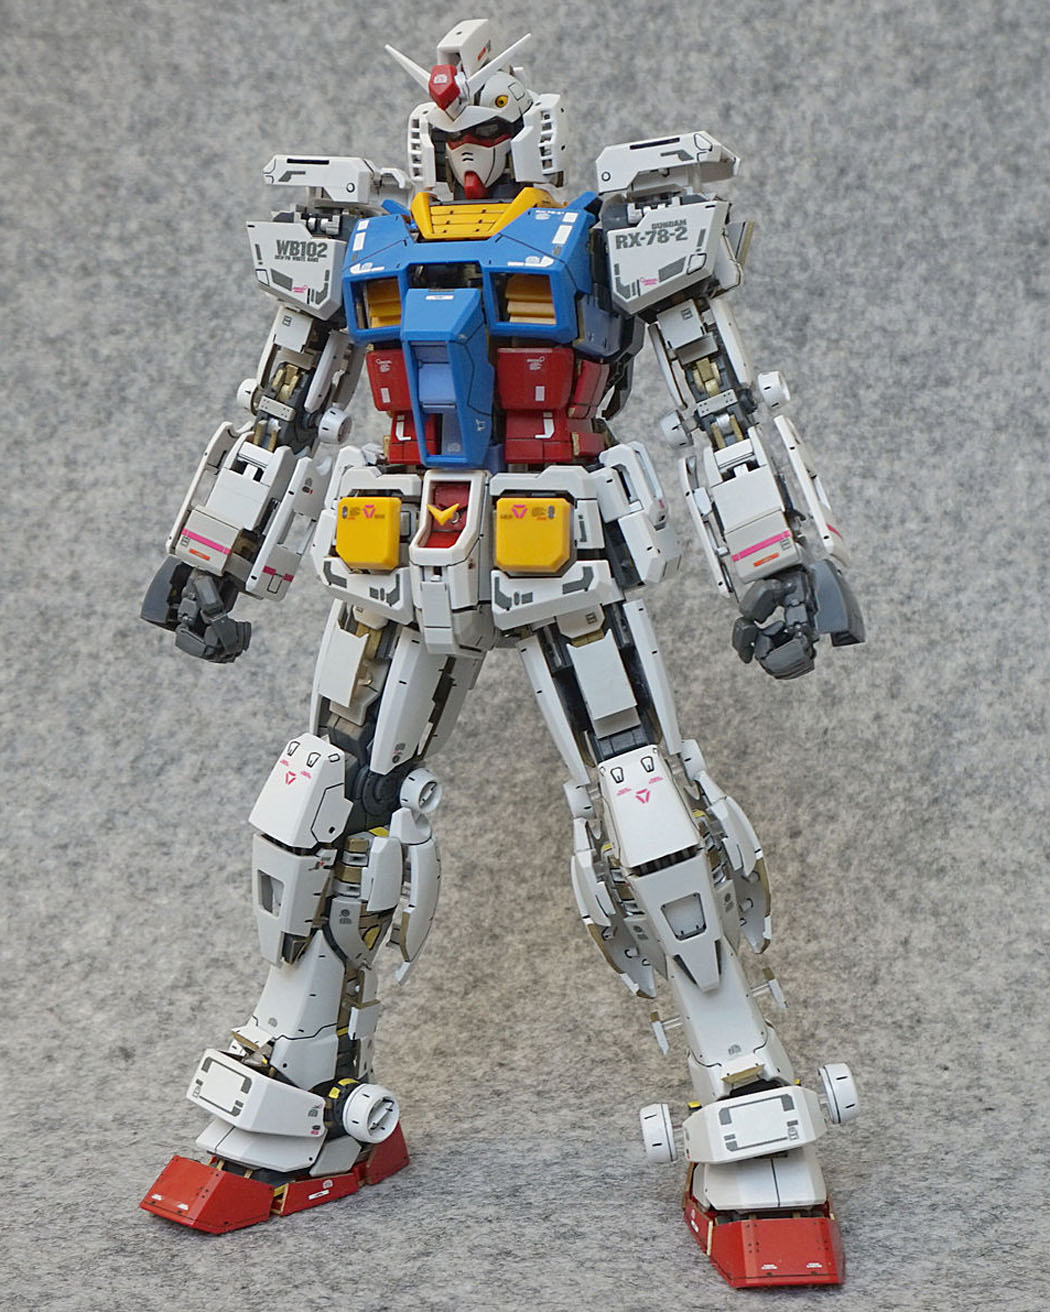 GUNDAM GUY: MG 1/100 RX-78-2 Gundam Ver. 3.0 'Open Hatch' - Customized